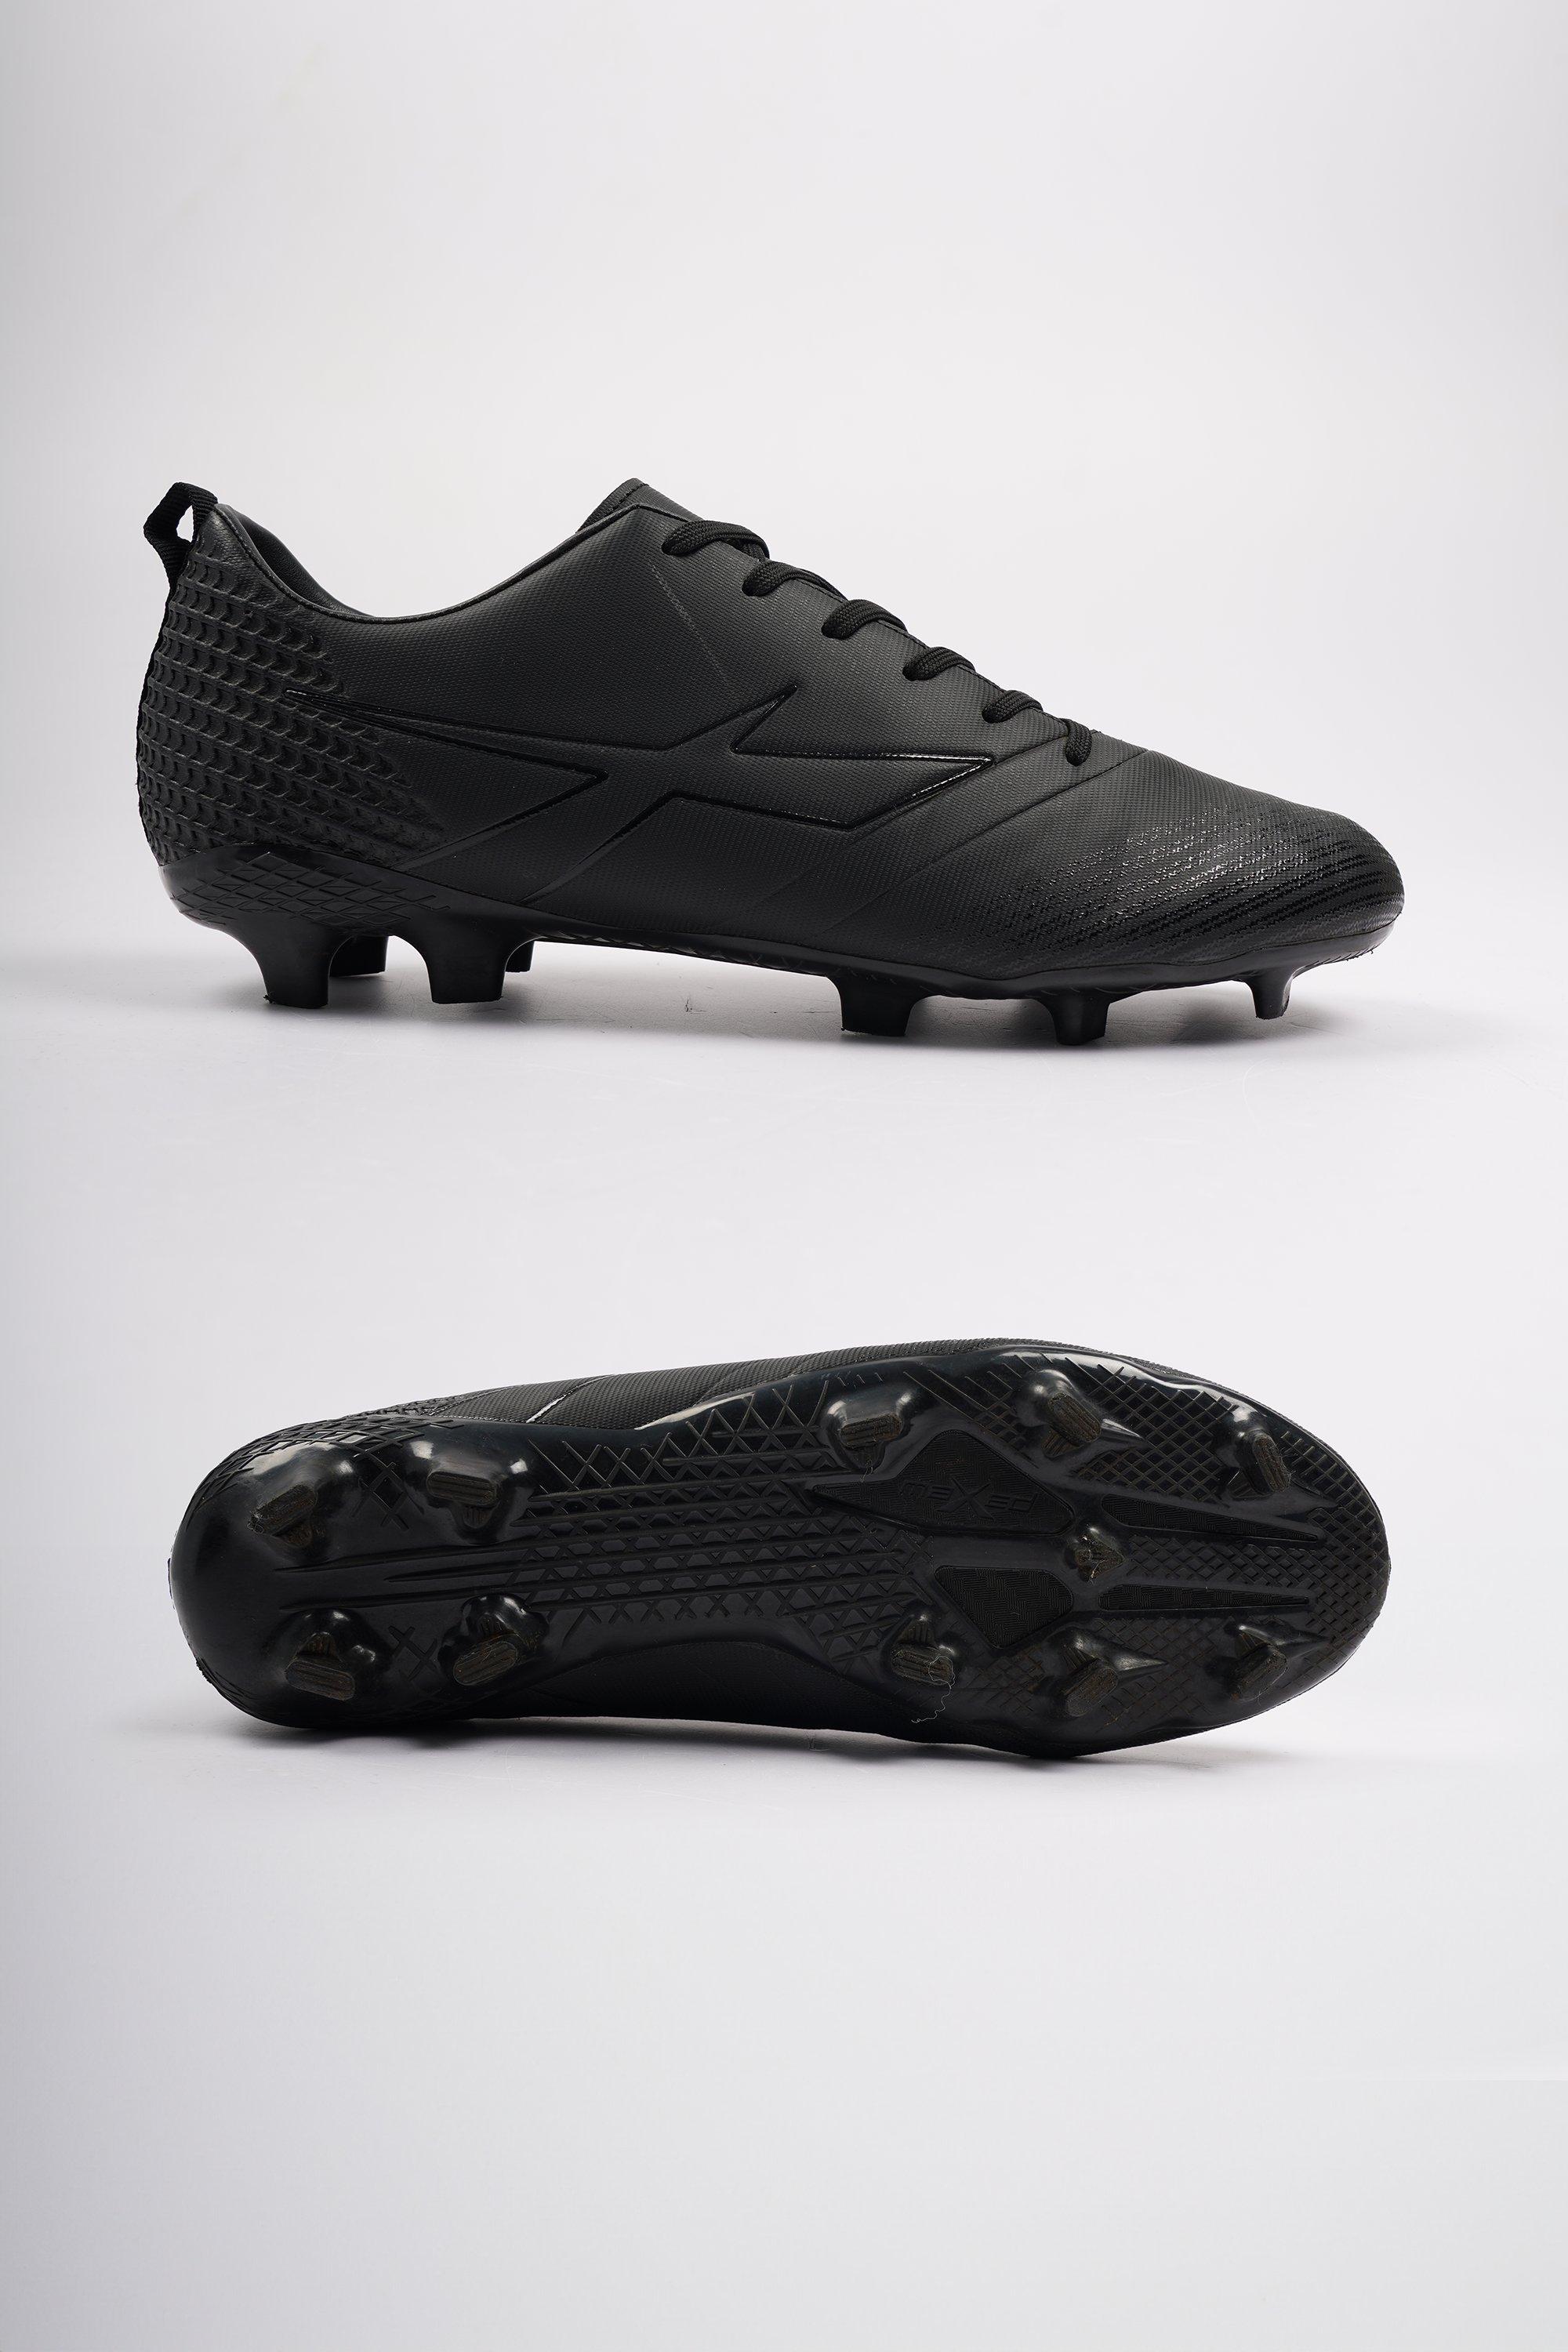 MRP Sport Ignite Knit Soccer Boot Prices | Shop Deals Online | PriceCheck